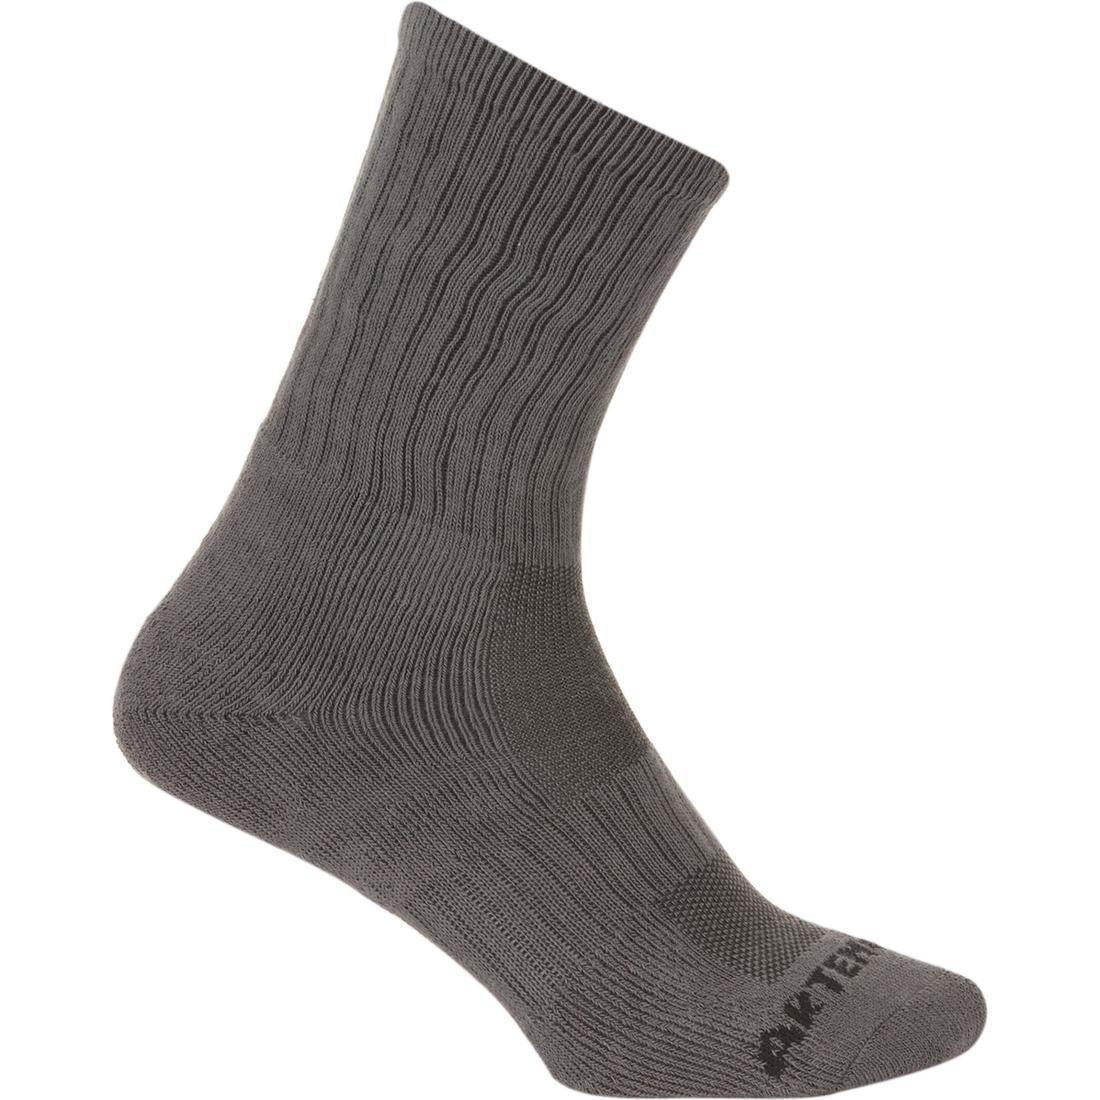 ARTENGO - RS800 Adult High Sports Socks 3-pack, Black